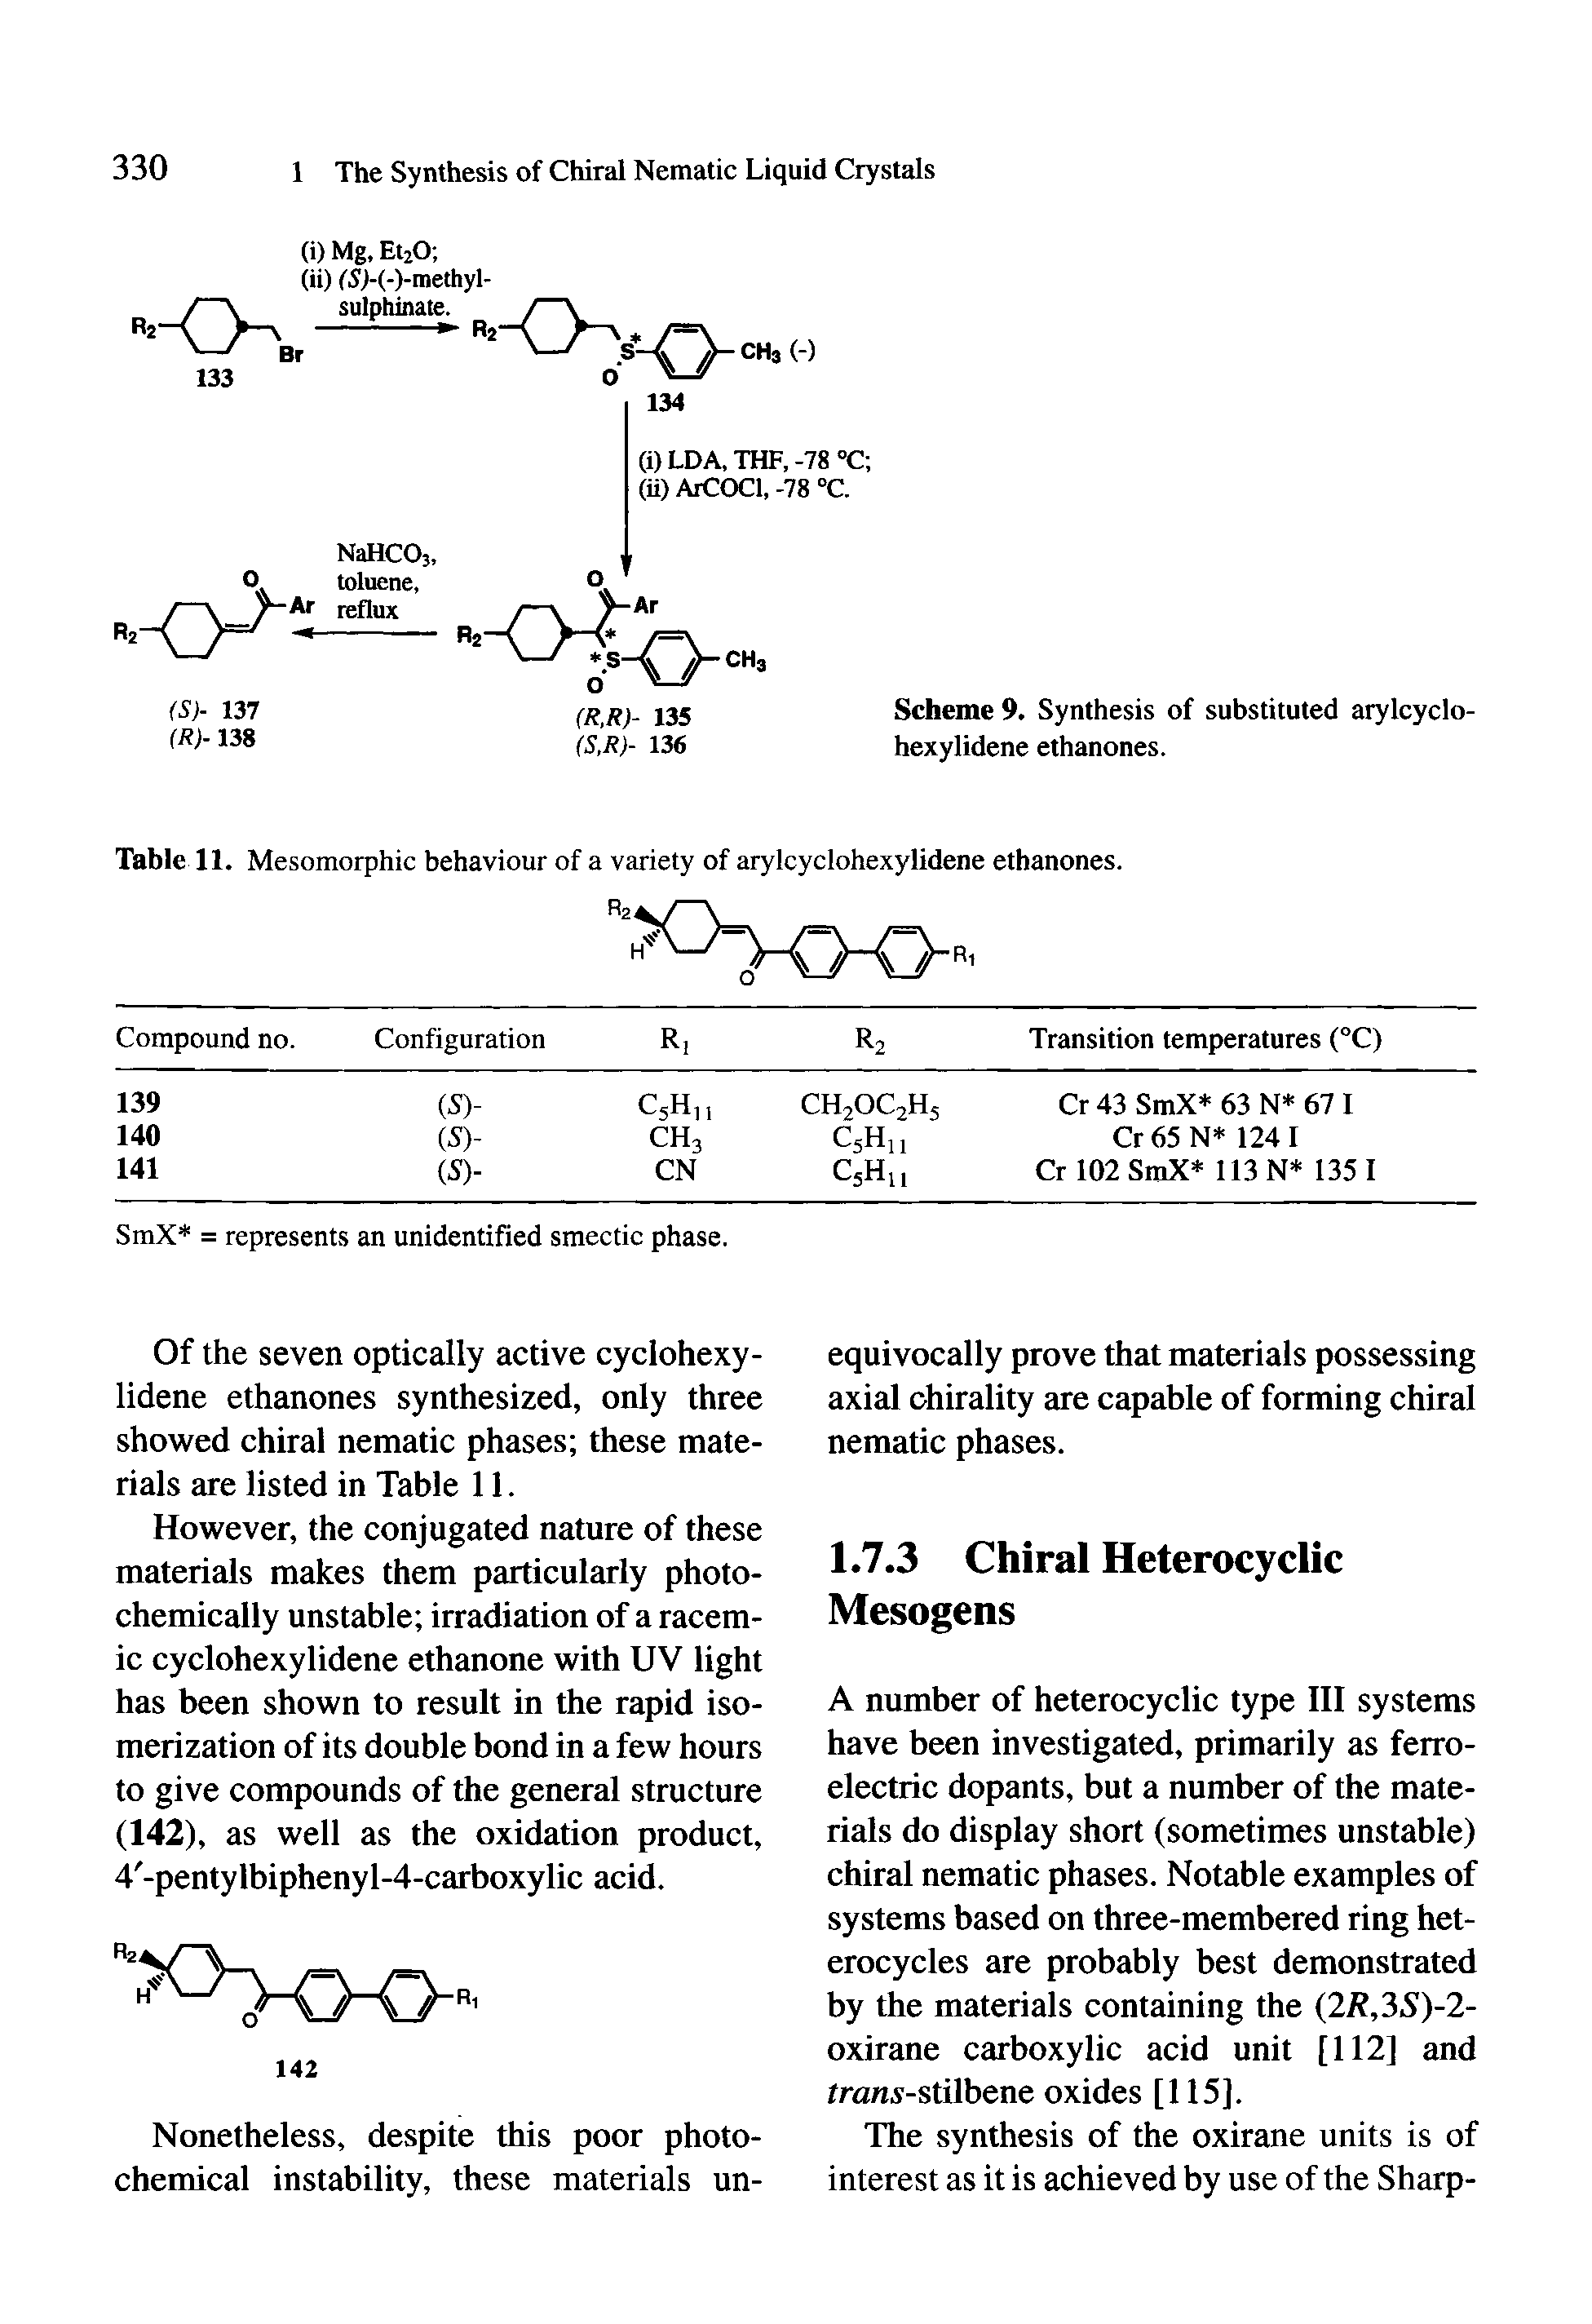 Table 11. Mesomorphic behaviour of a variety of arylcyclohexylidene ethanones.